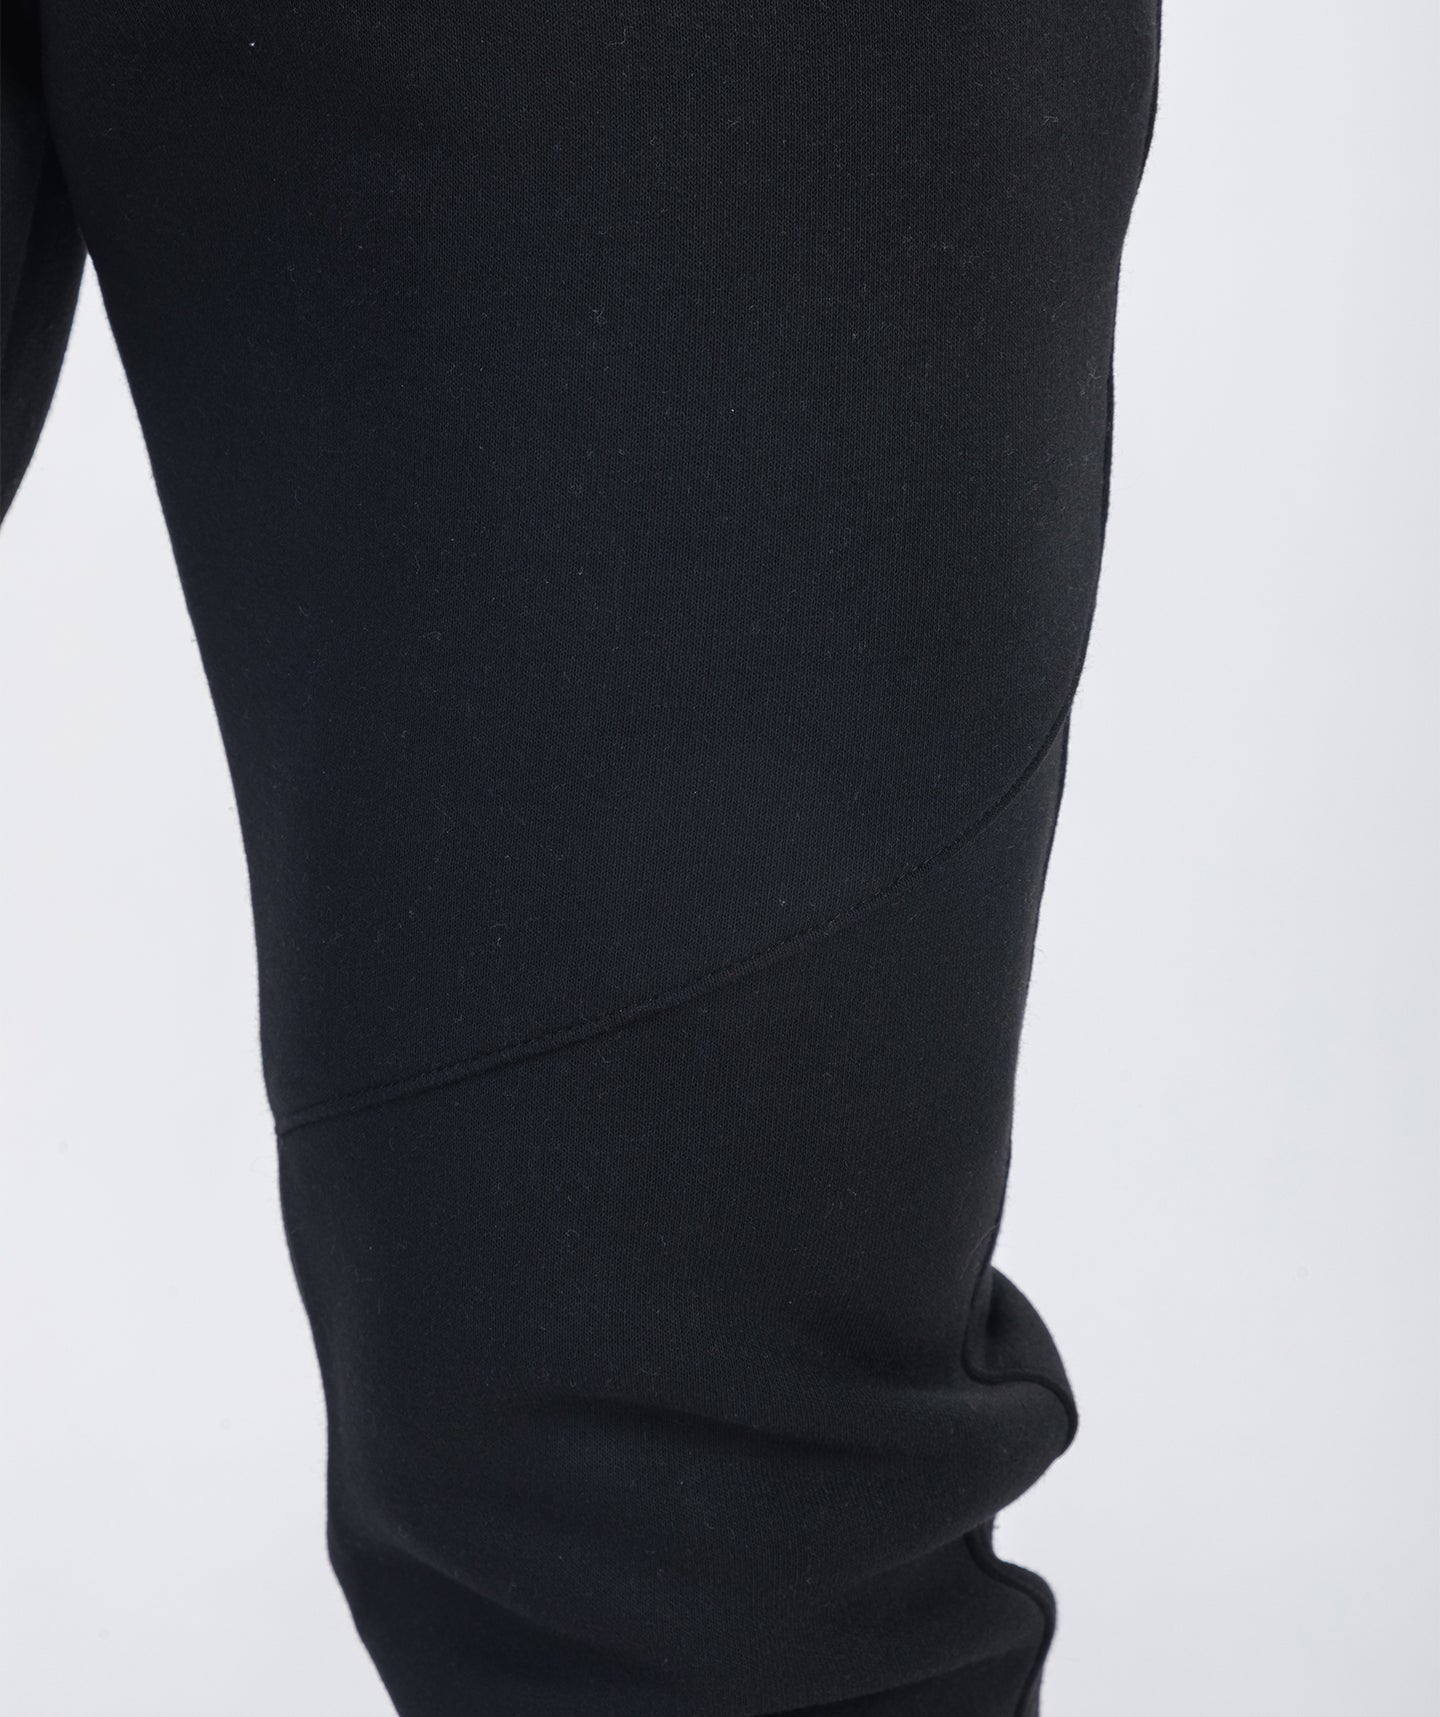 Kg ⚜  
11108-01 ⚜  
A7 ⚜  
PANTONE: Black ⚜  
88 % nylon 12 % spandex, 160cmx195g fabric v189-gray P:Black